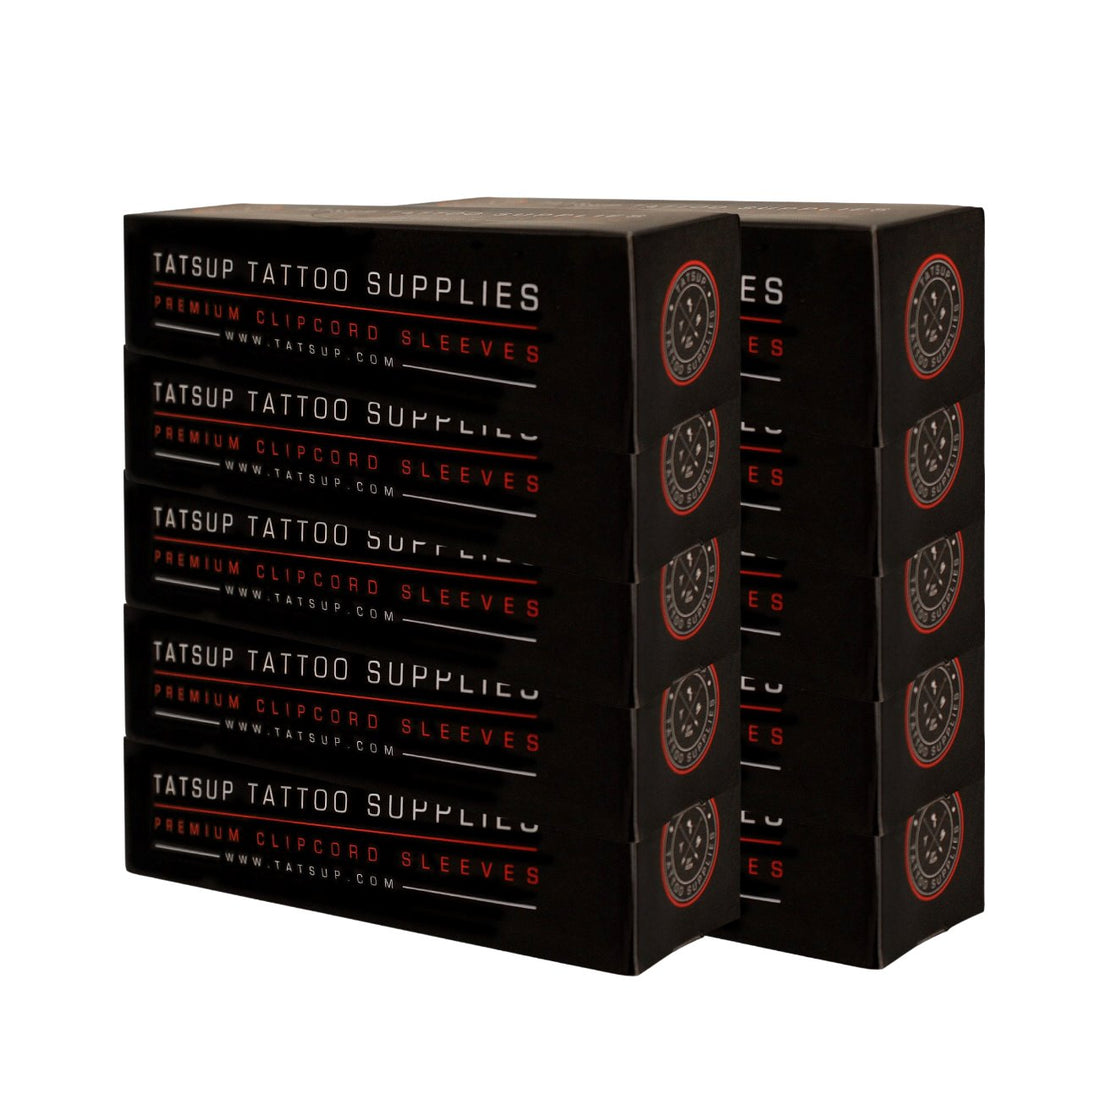 Tatsup Premium Clipcord Sleeves Studio Supplies Tatsup CARTON of 10 BOXES 